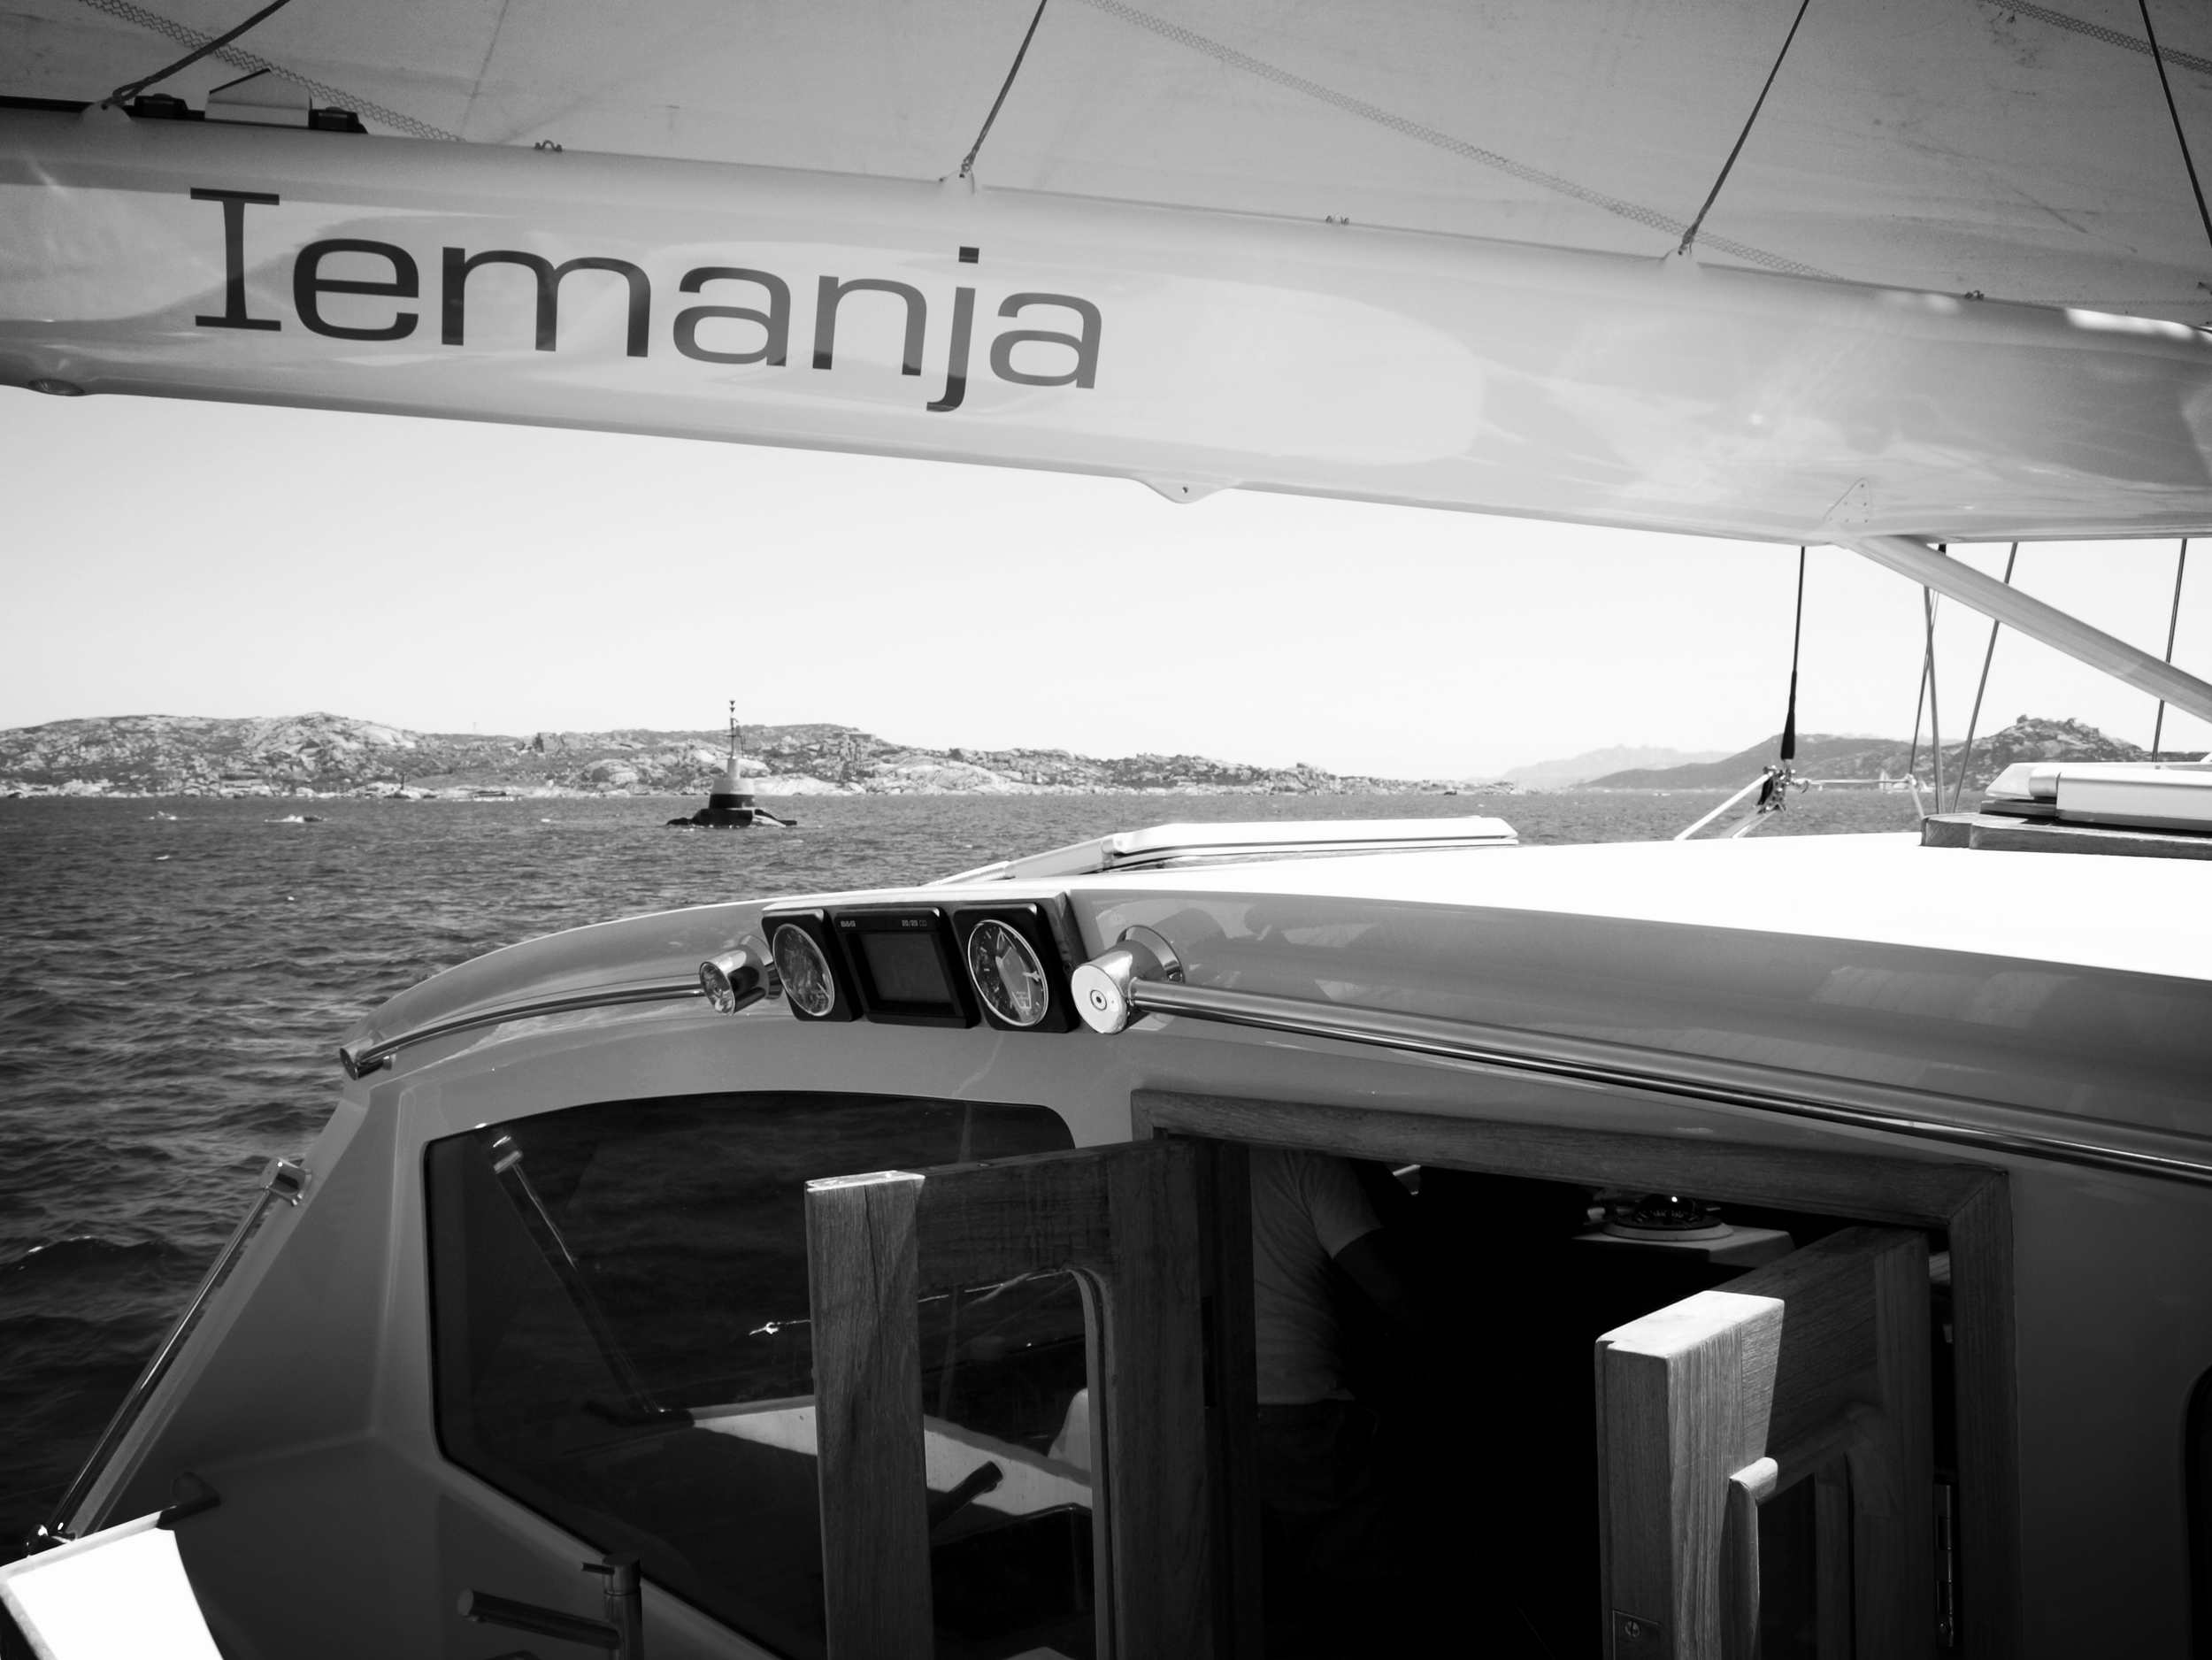 Jemania La Ciotat-Palermo Juli 08 © Linus Kammermann - 057.jpg